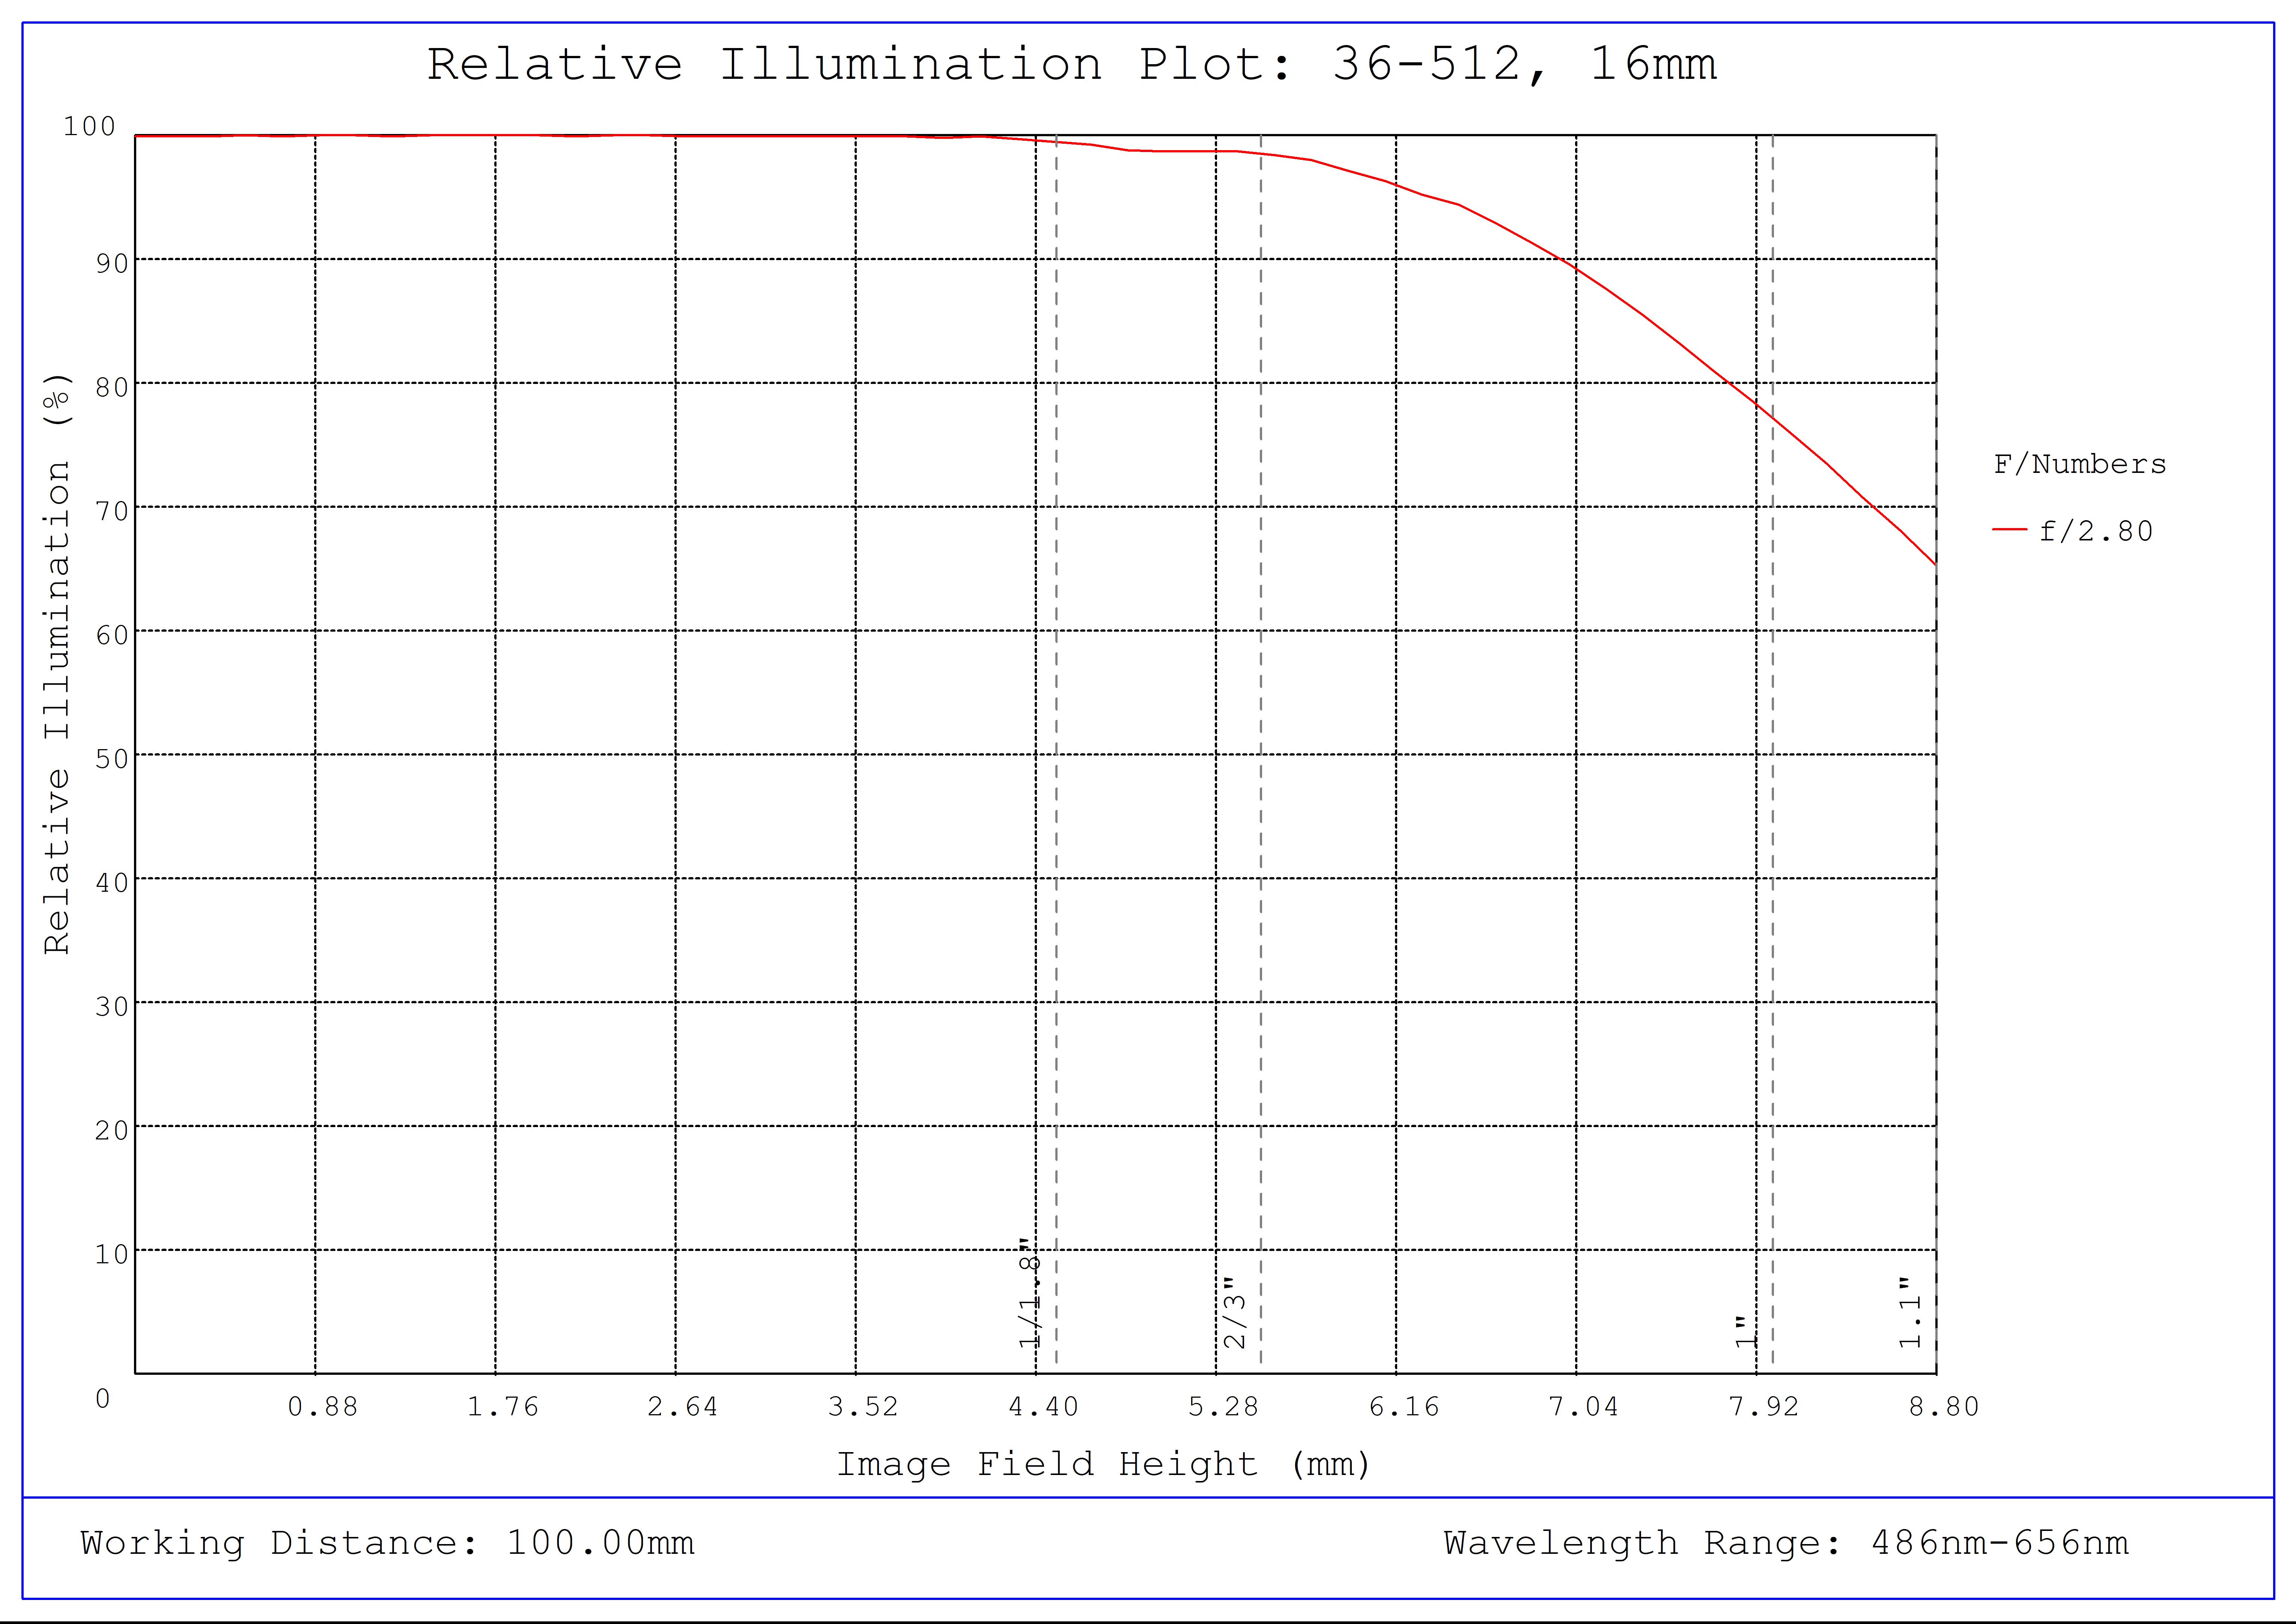 #36-512, 16mm f/2.8, HPr Series Fixed Focal Length Lens, Relative Illumination Plot